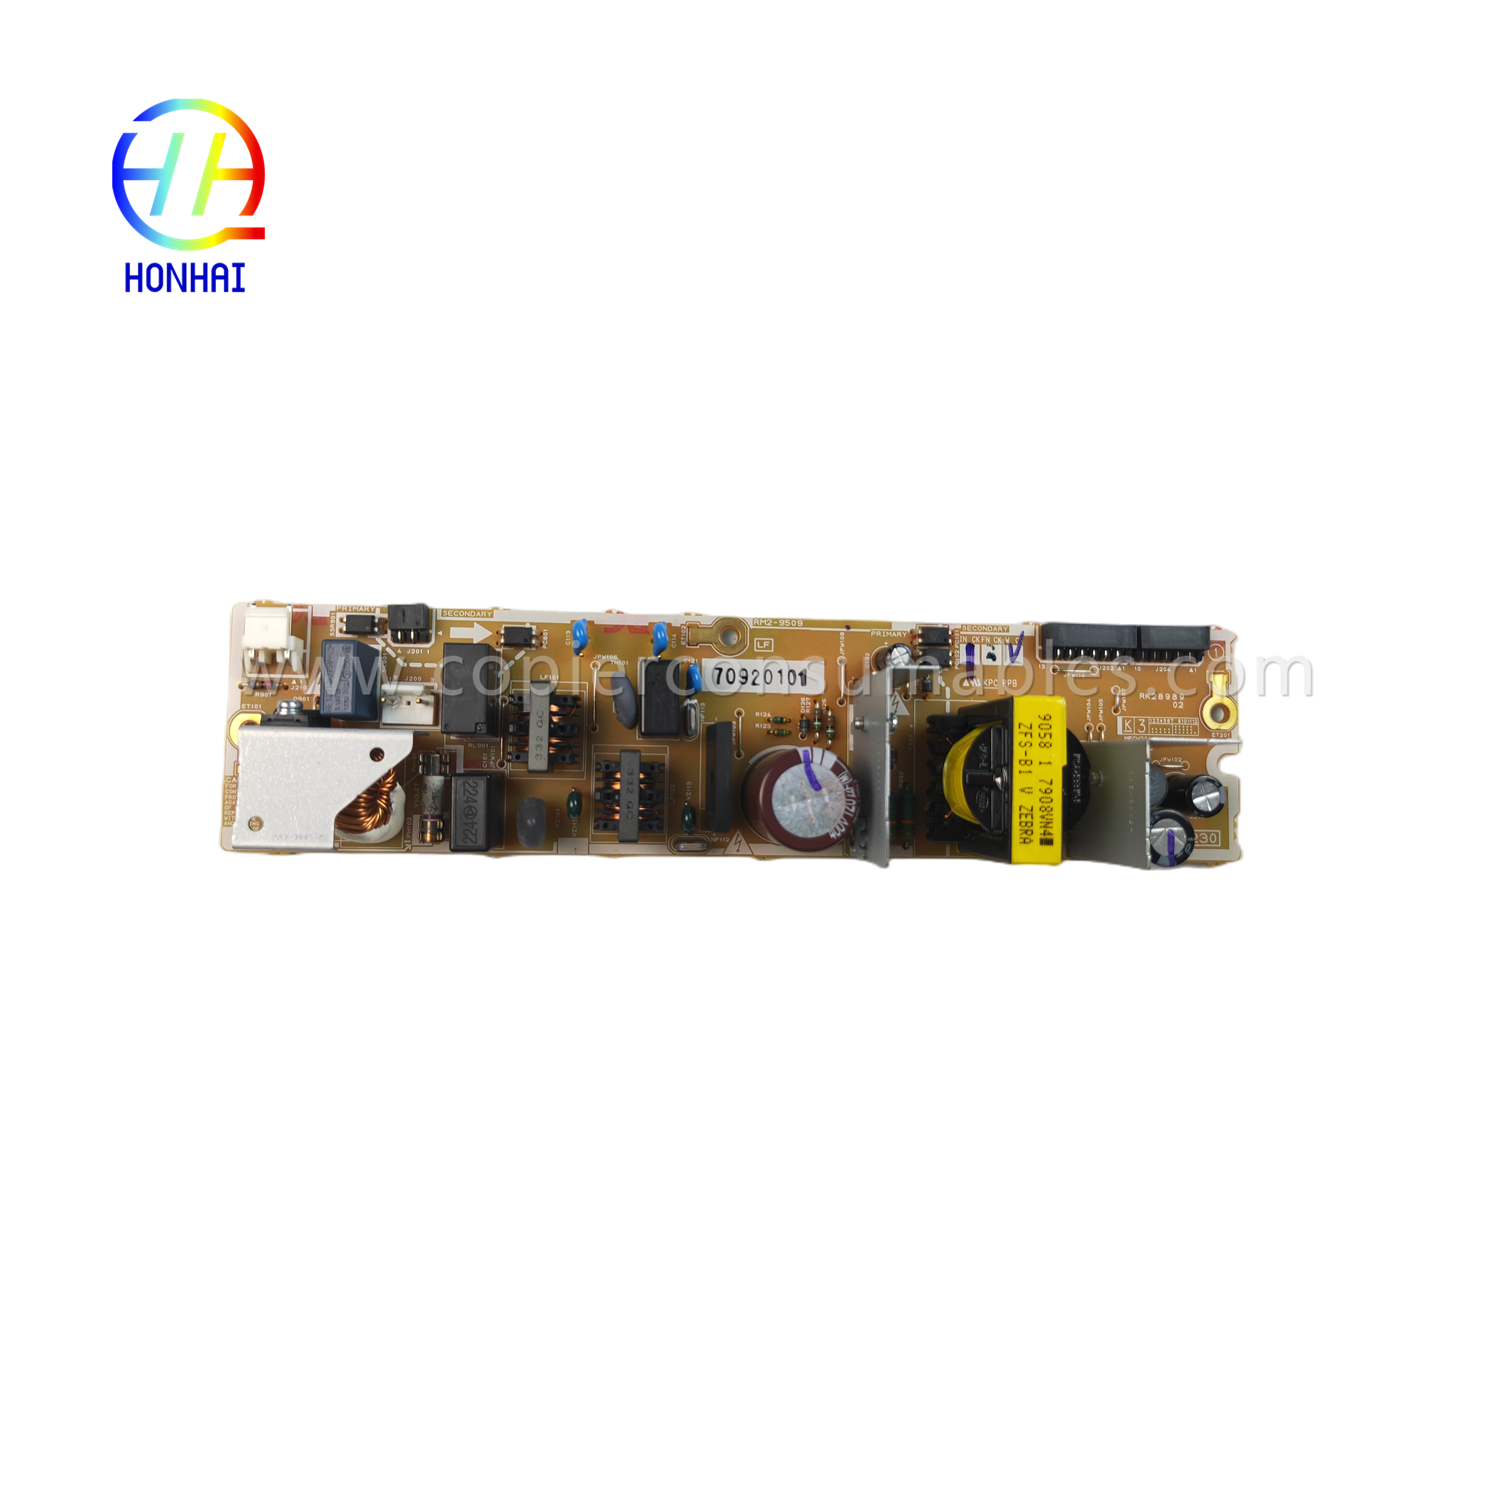 https://c585.goodo.net/power-supply-220v-for-hp-color-laserjet-pro-mfp-m283fdw-rm2-2428-product/